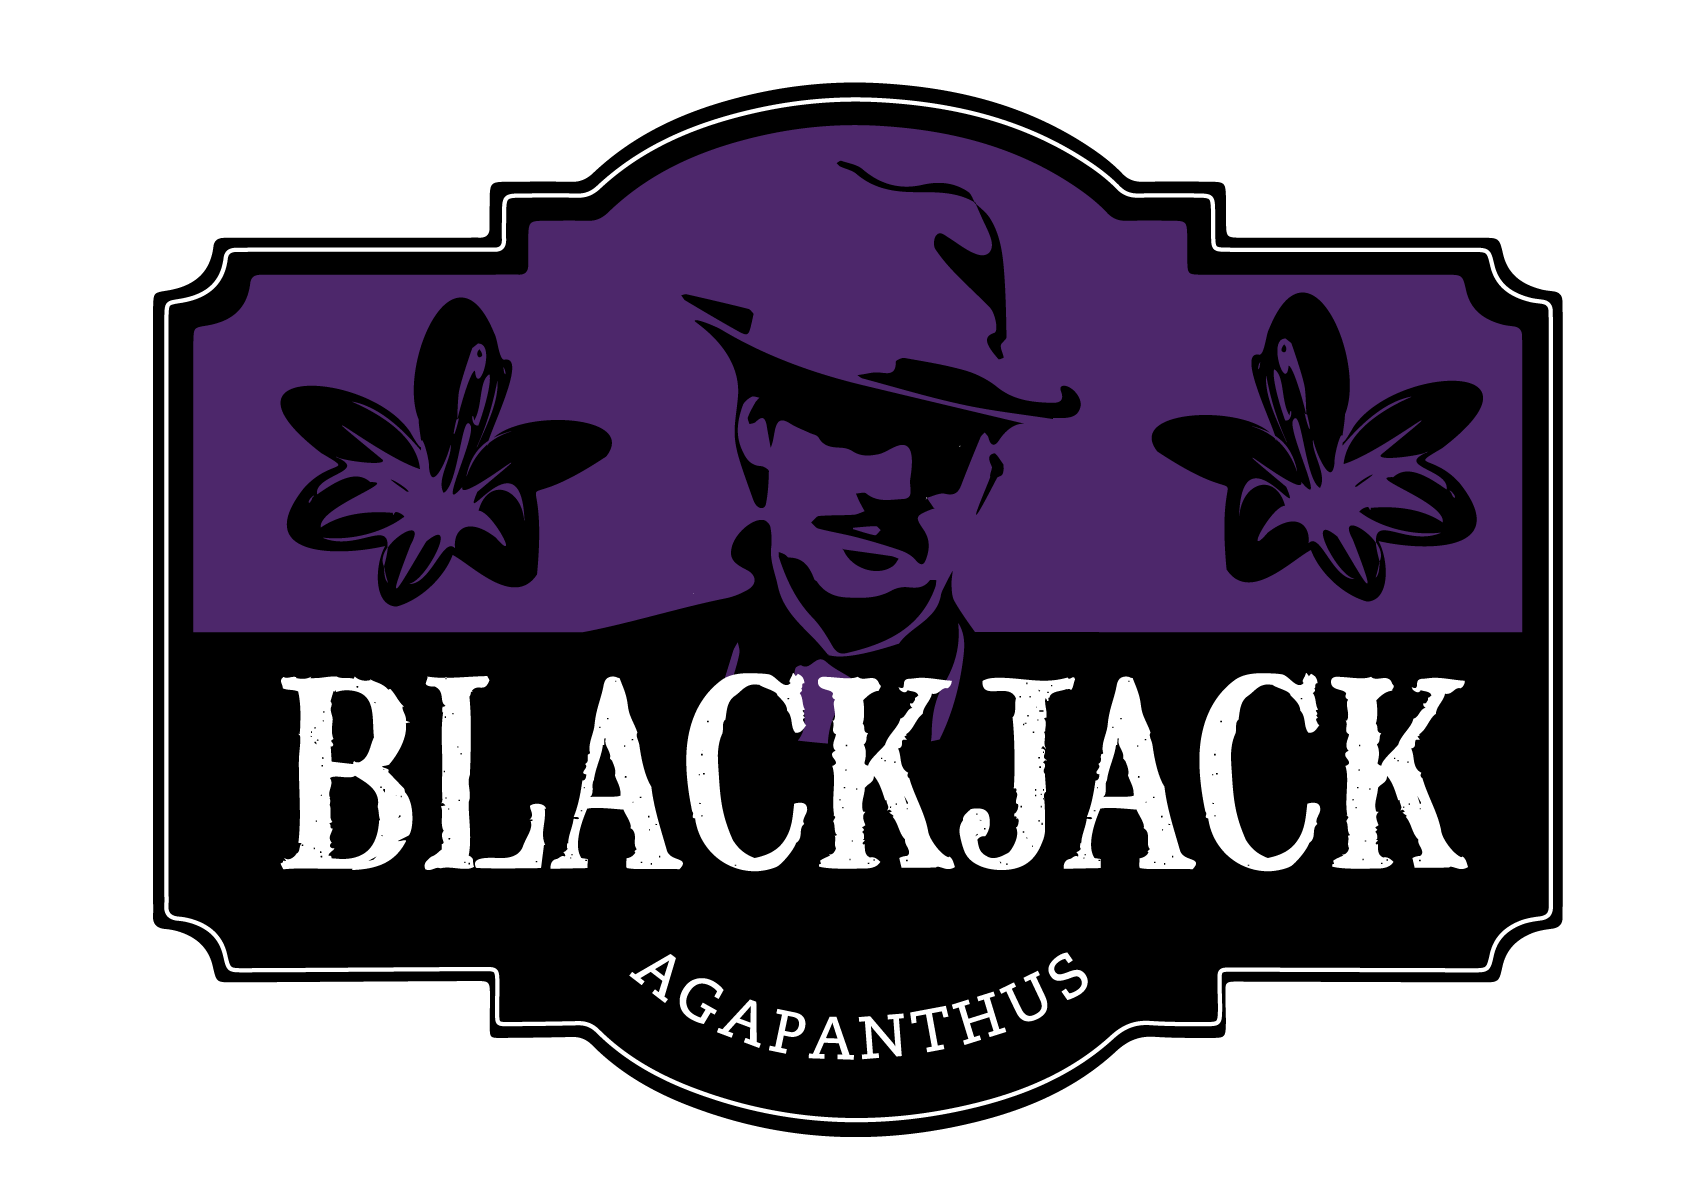 logo-agapanthus-blackjack-dwaghyb02-pp35-591